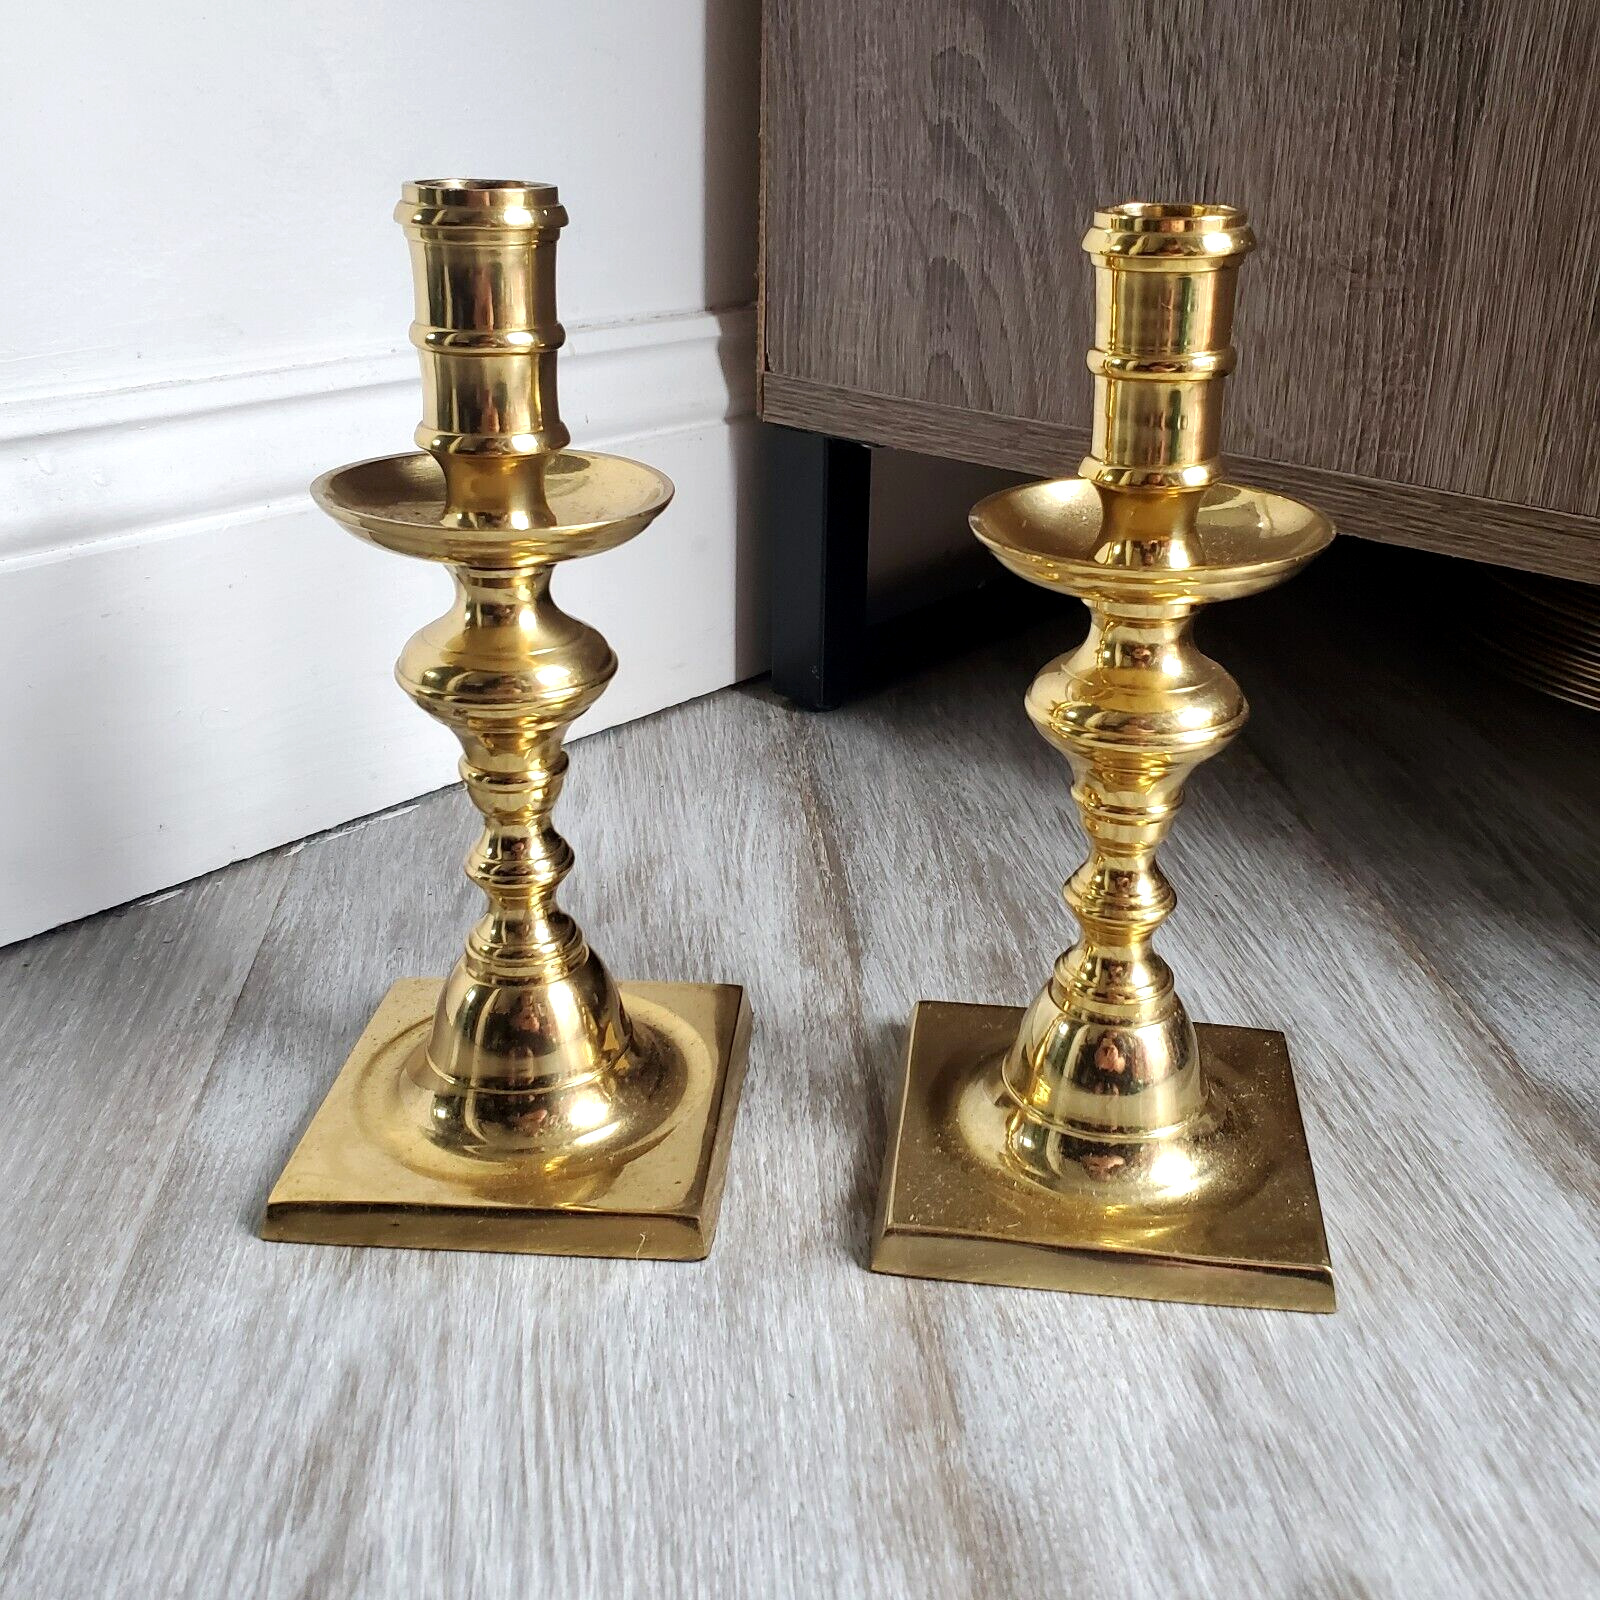 2 Vintage Brass Candlesticks Candle Holders Decor